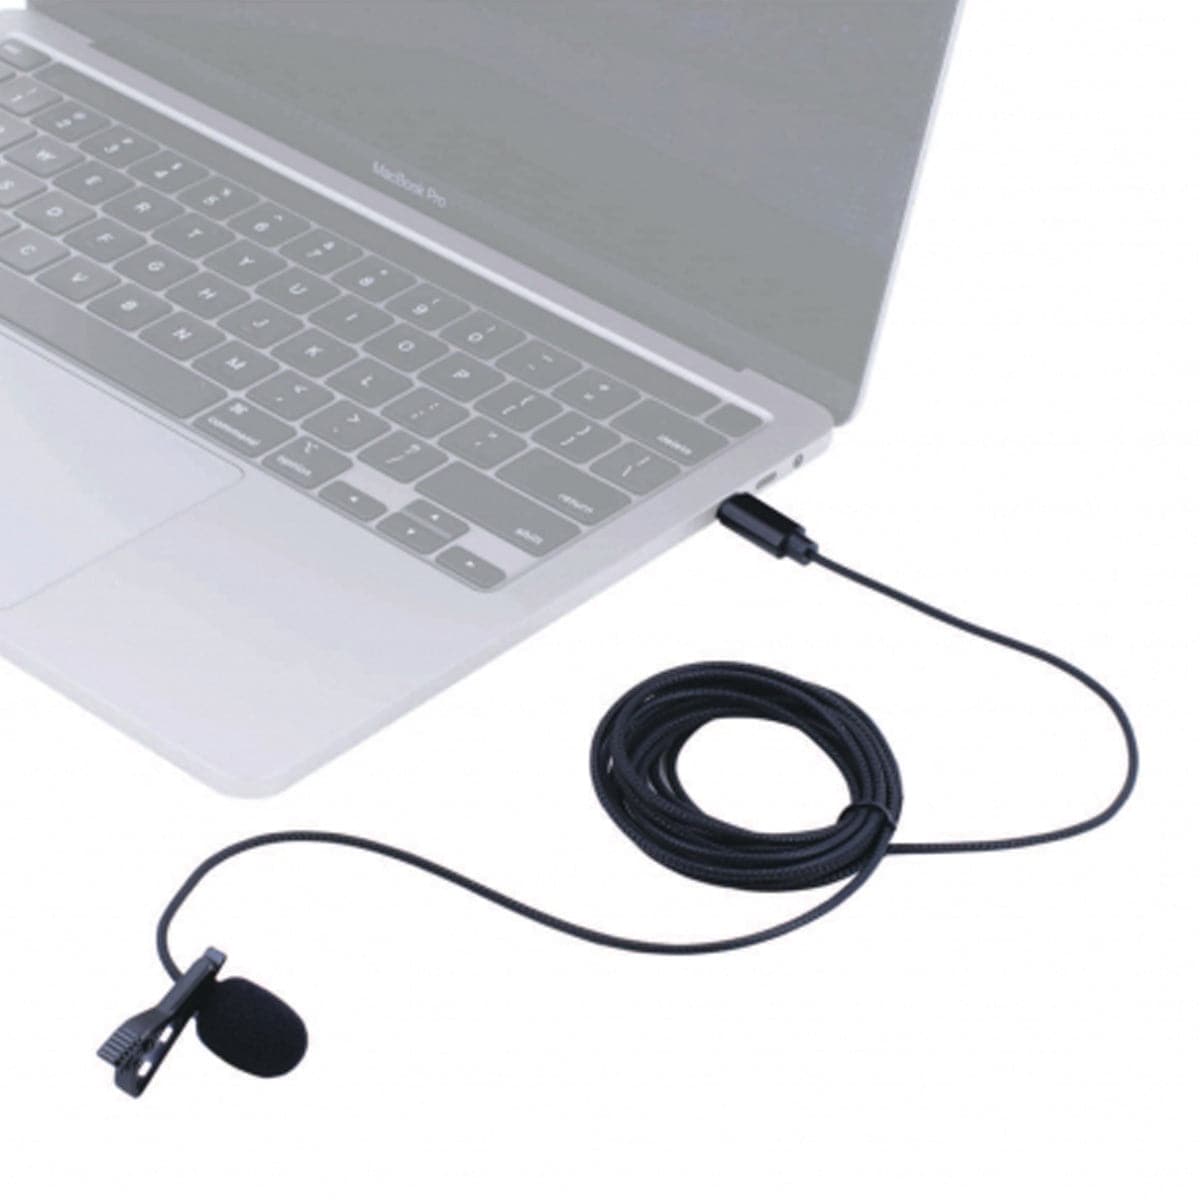 CAD Podmaster USB-C Mini Lavalier Microphone